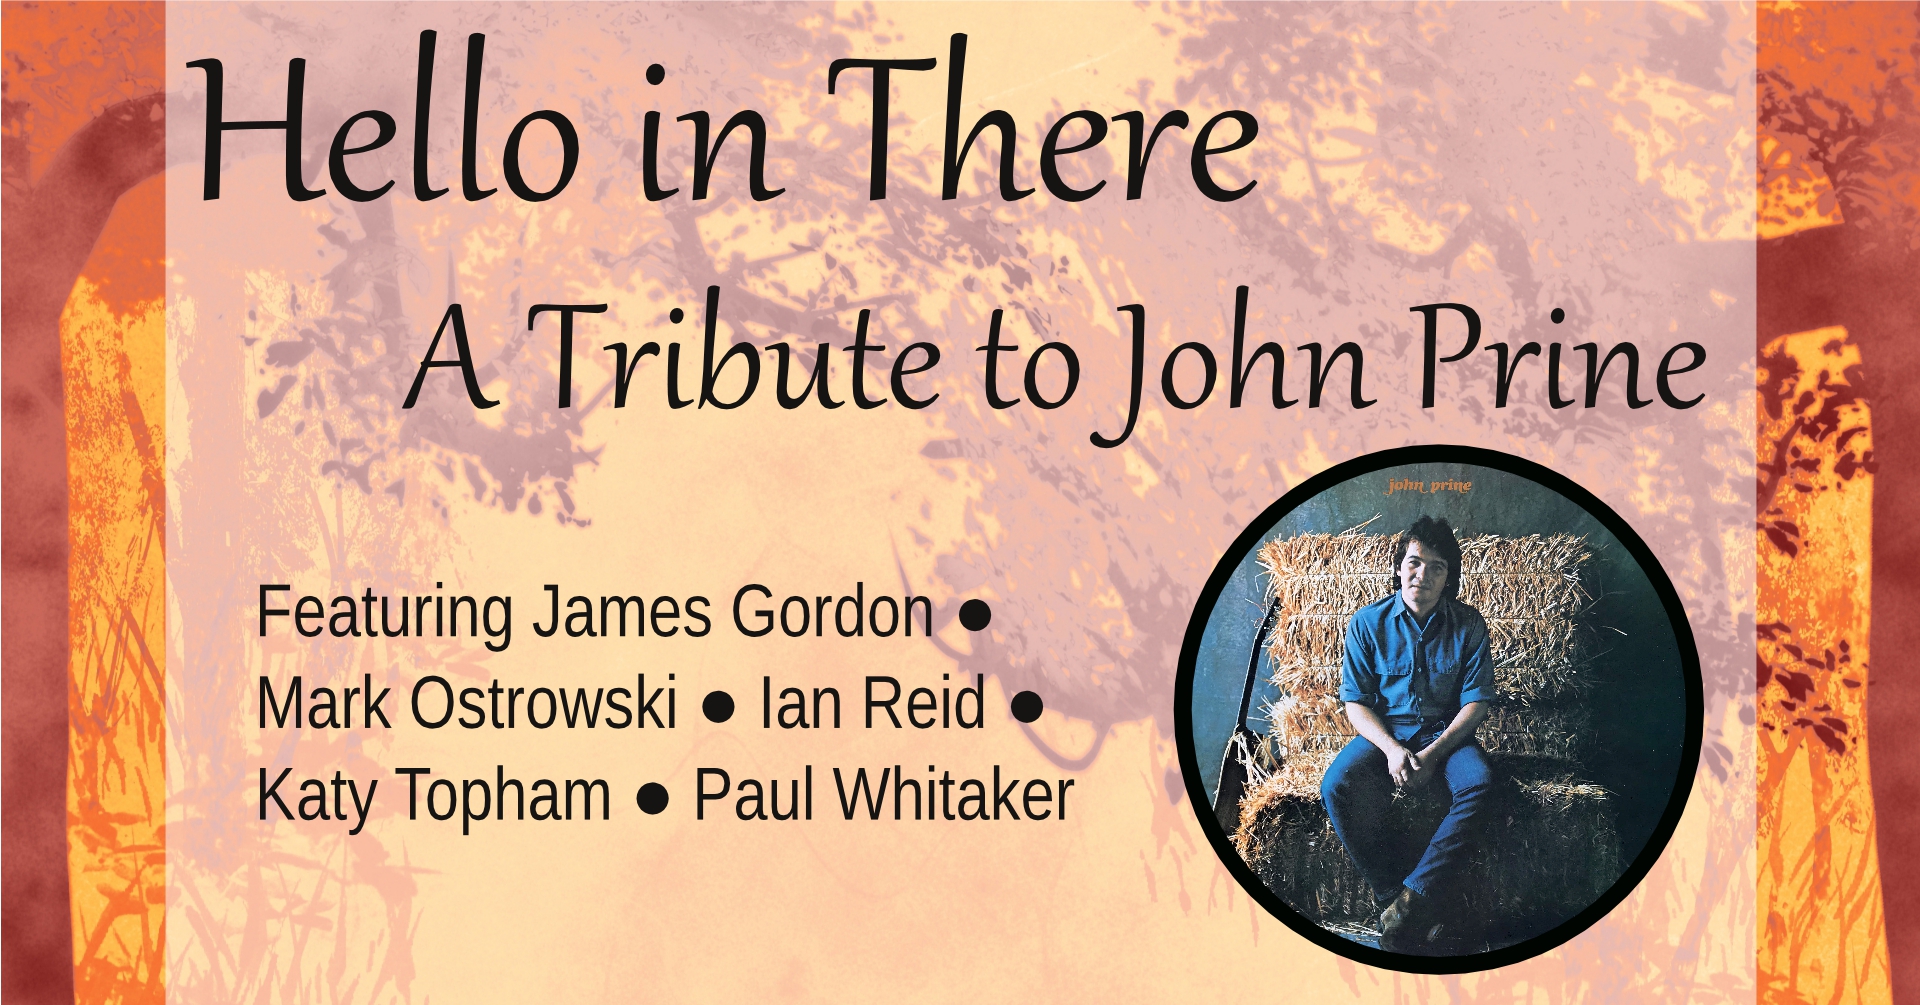 John Prine Facebook banner-page001 (1)